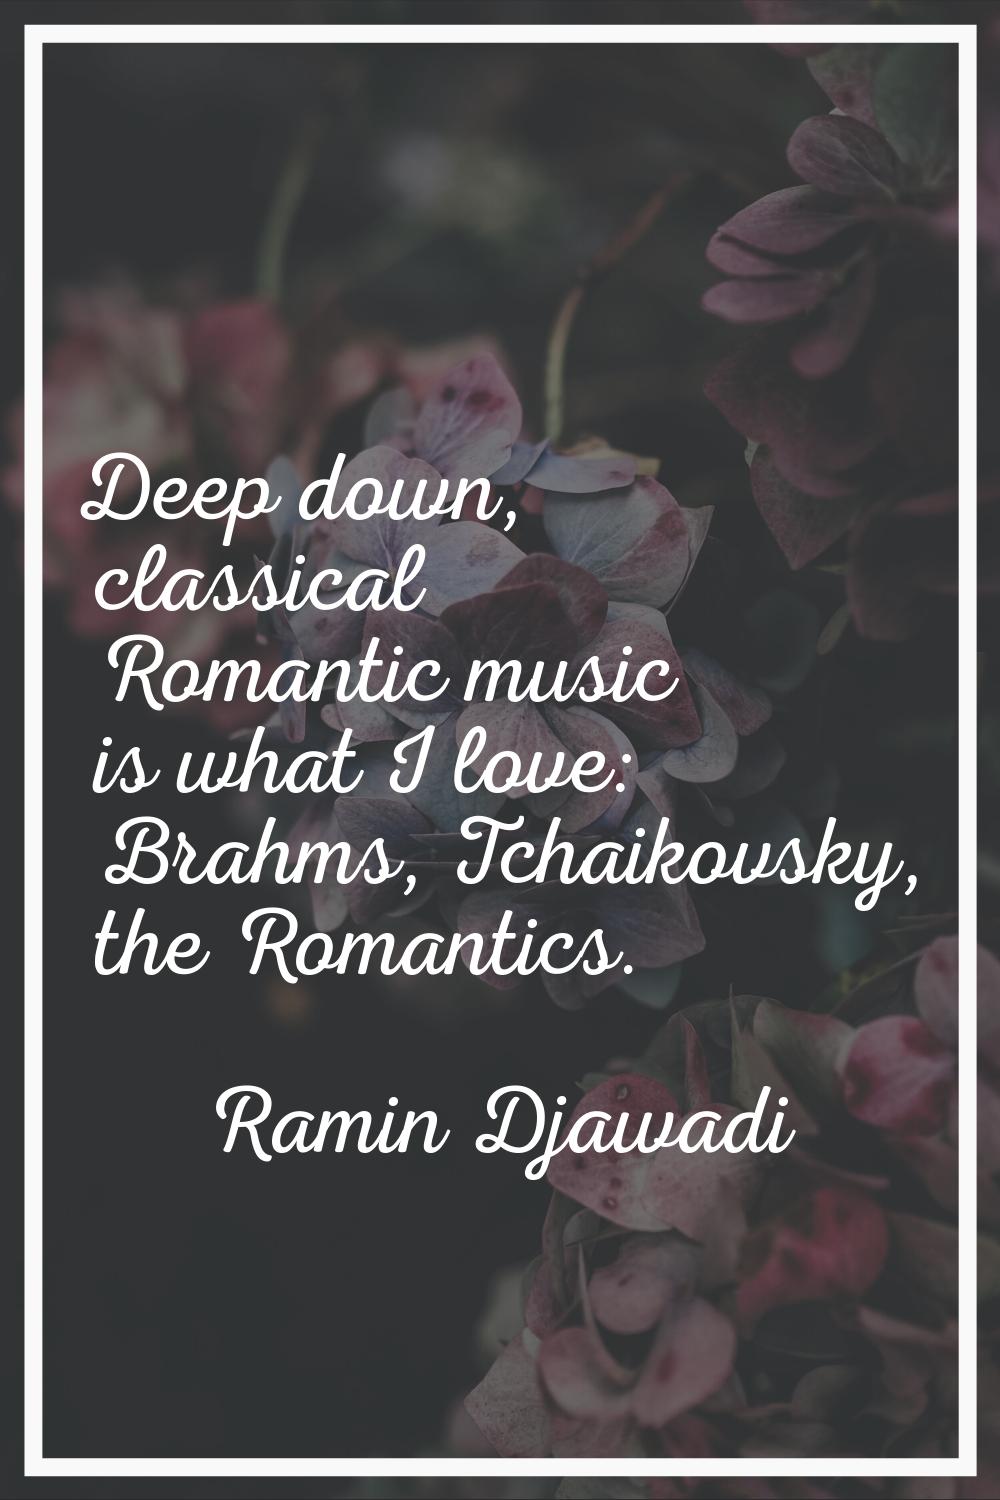 Deep down, classical Romantic music is what I love: Brahms, Tchaikovsky, the Romantics.